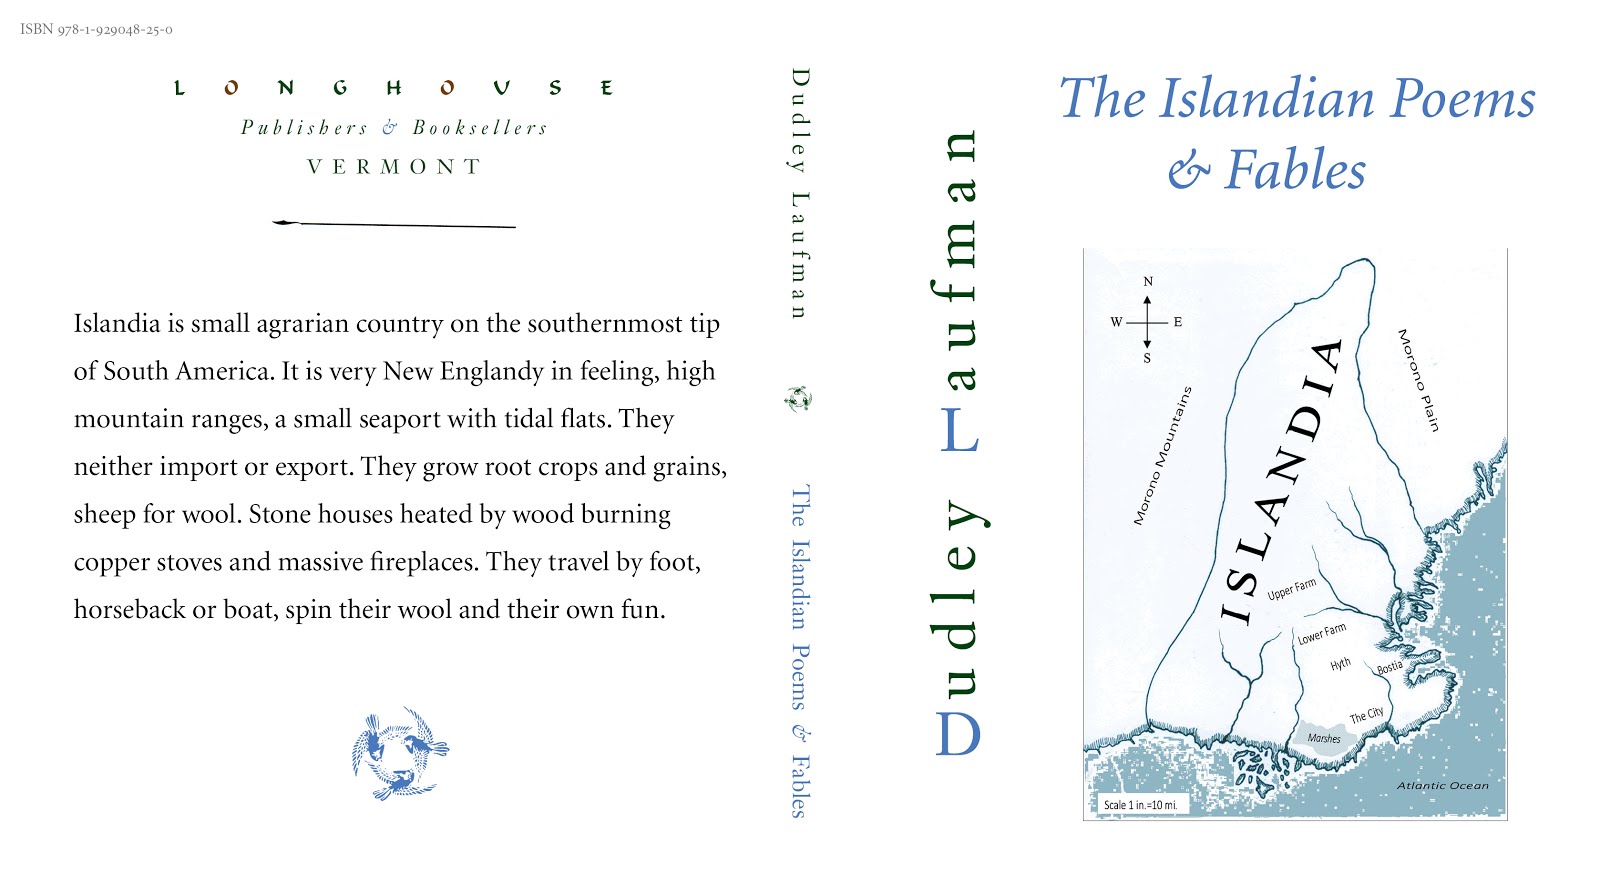 Dudley Laufman's Islandian Poems